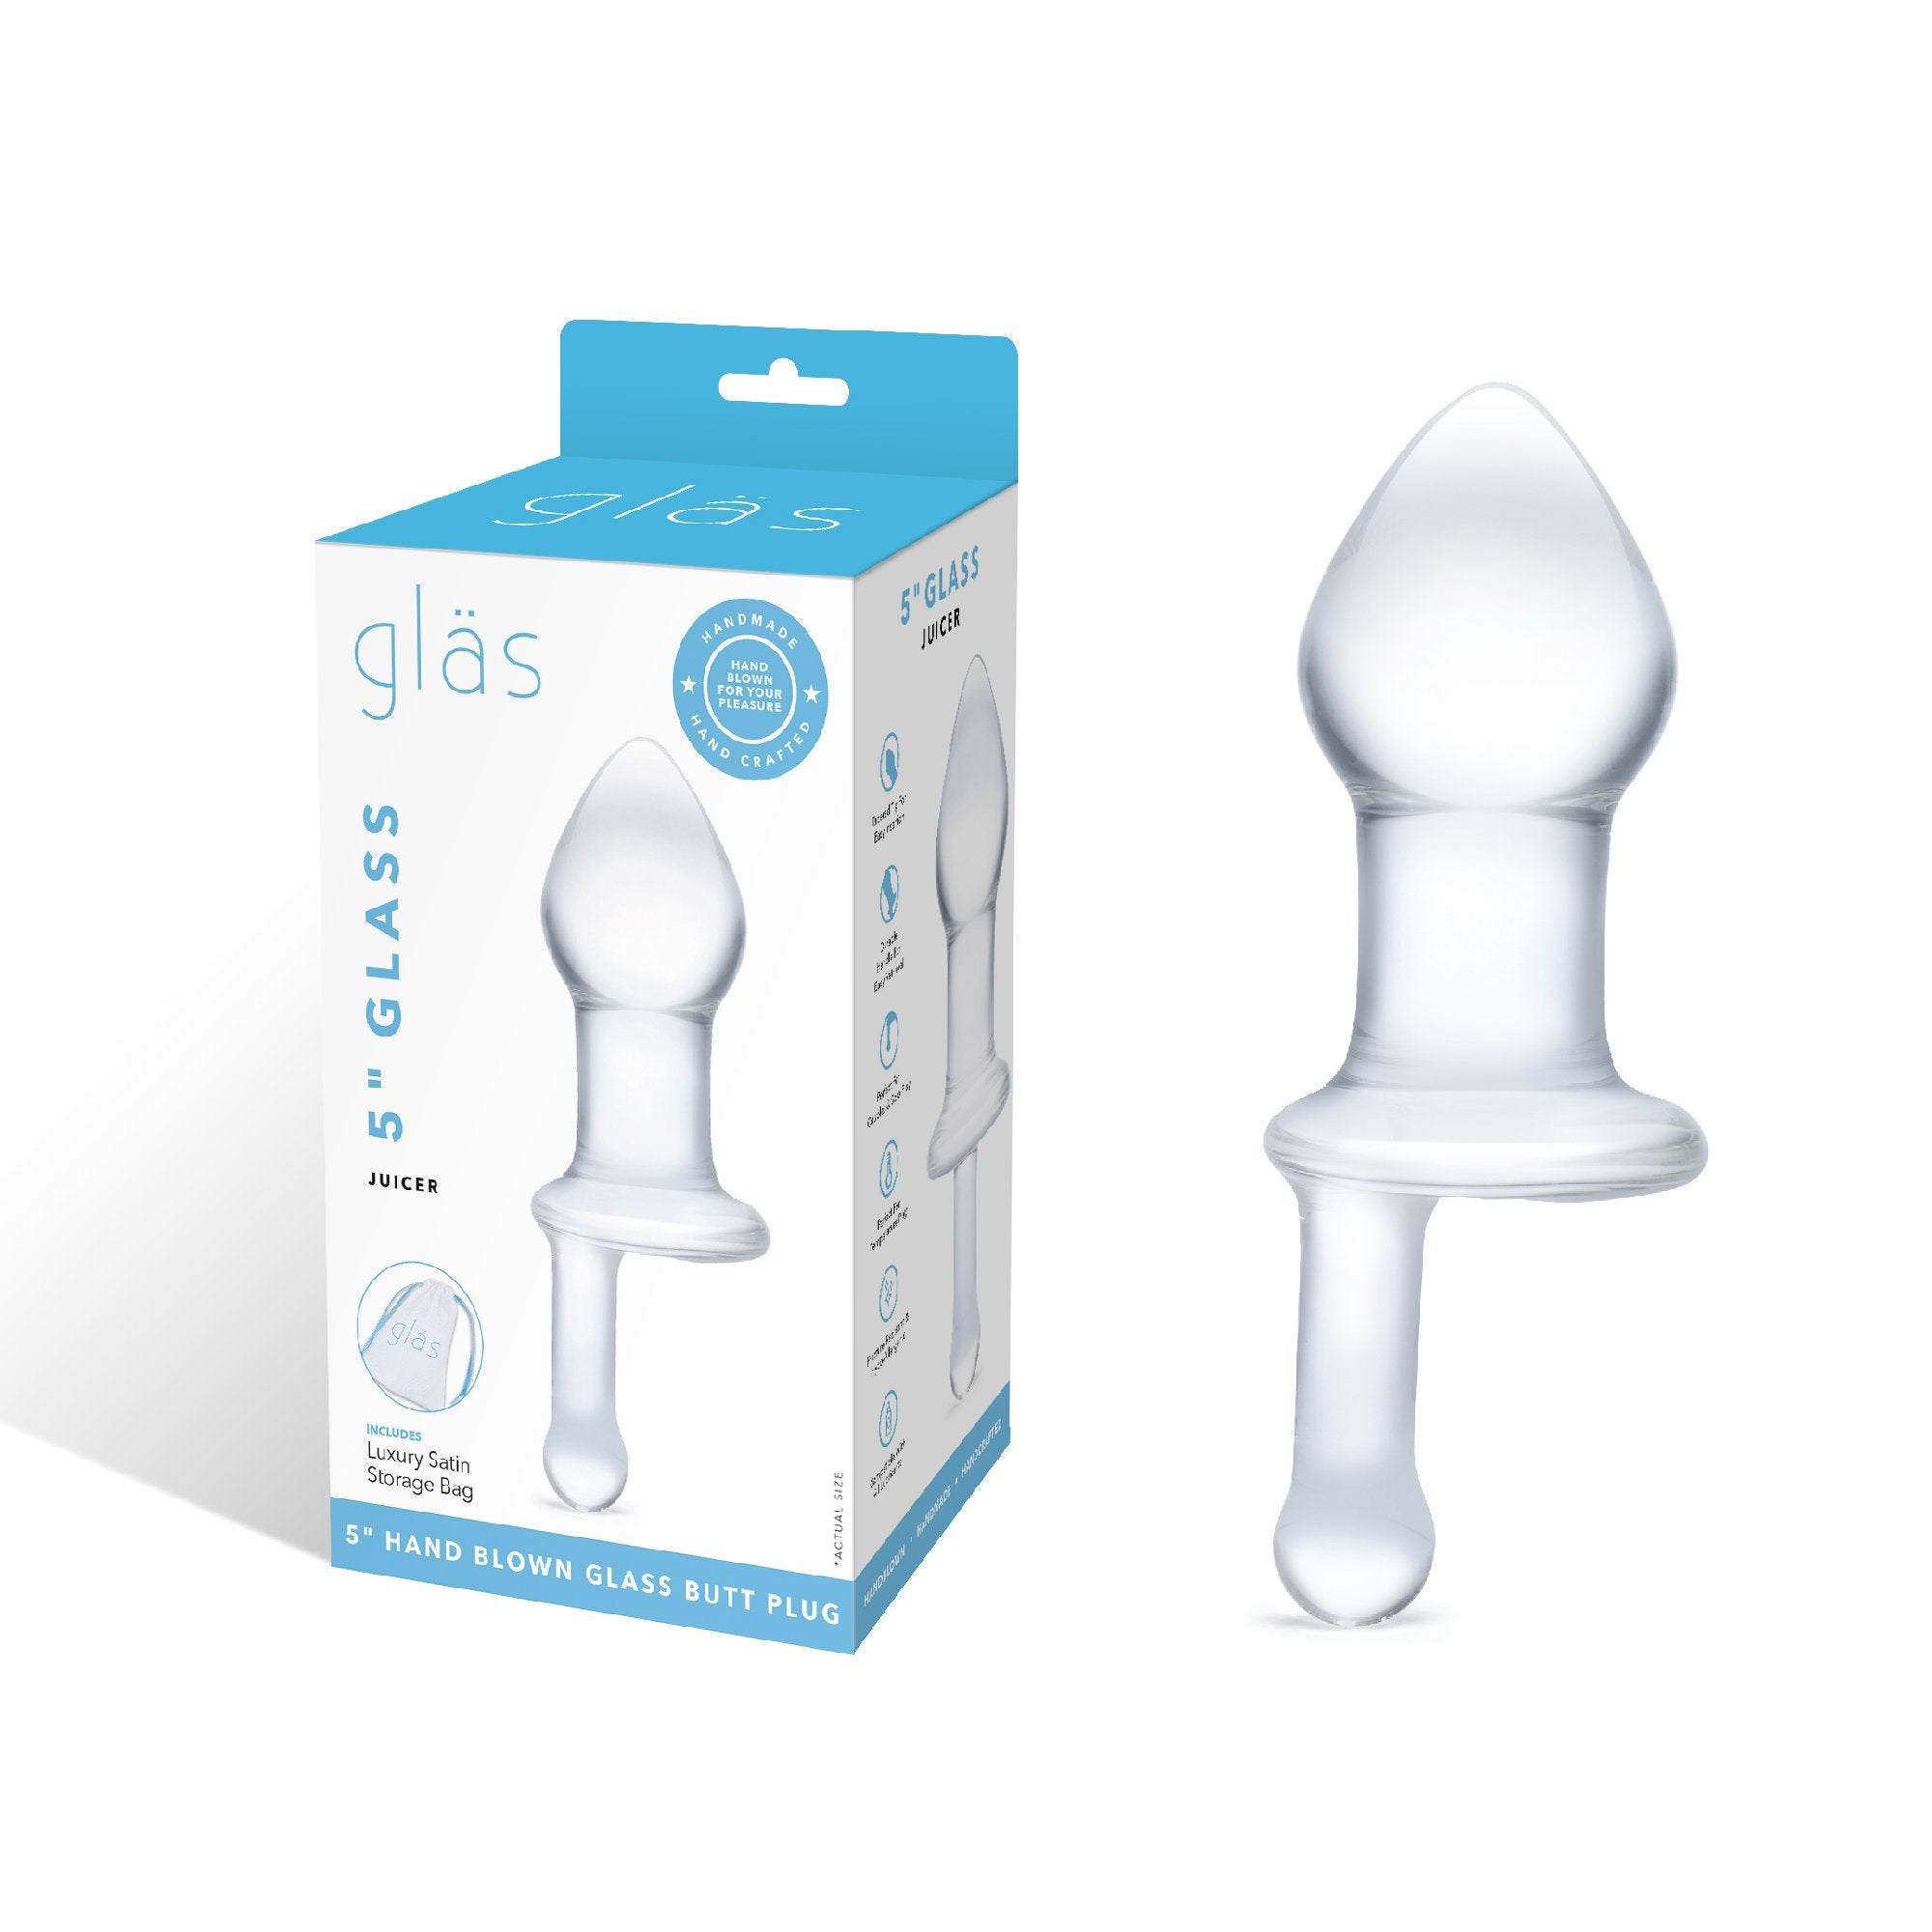 Packaging of the Gläs 5 inch Glass Juicer Glass Butt Plug